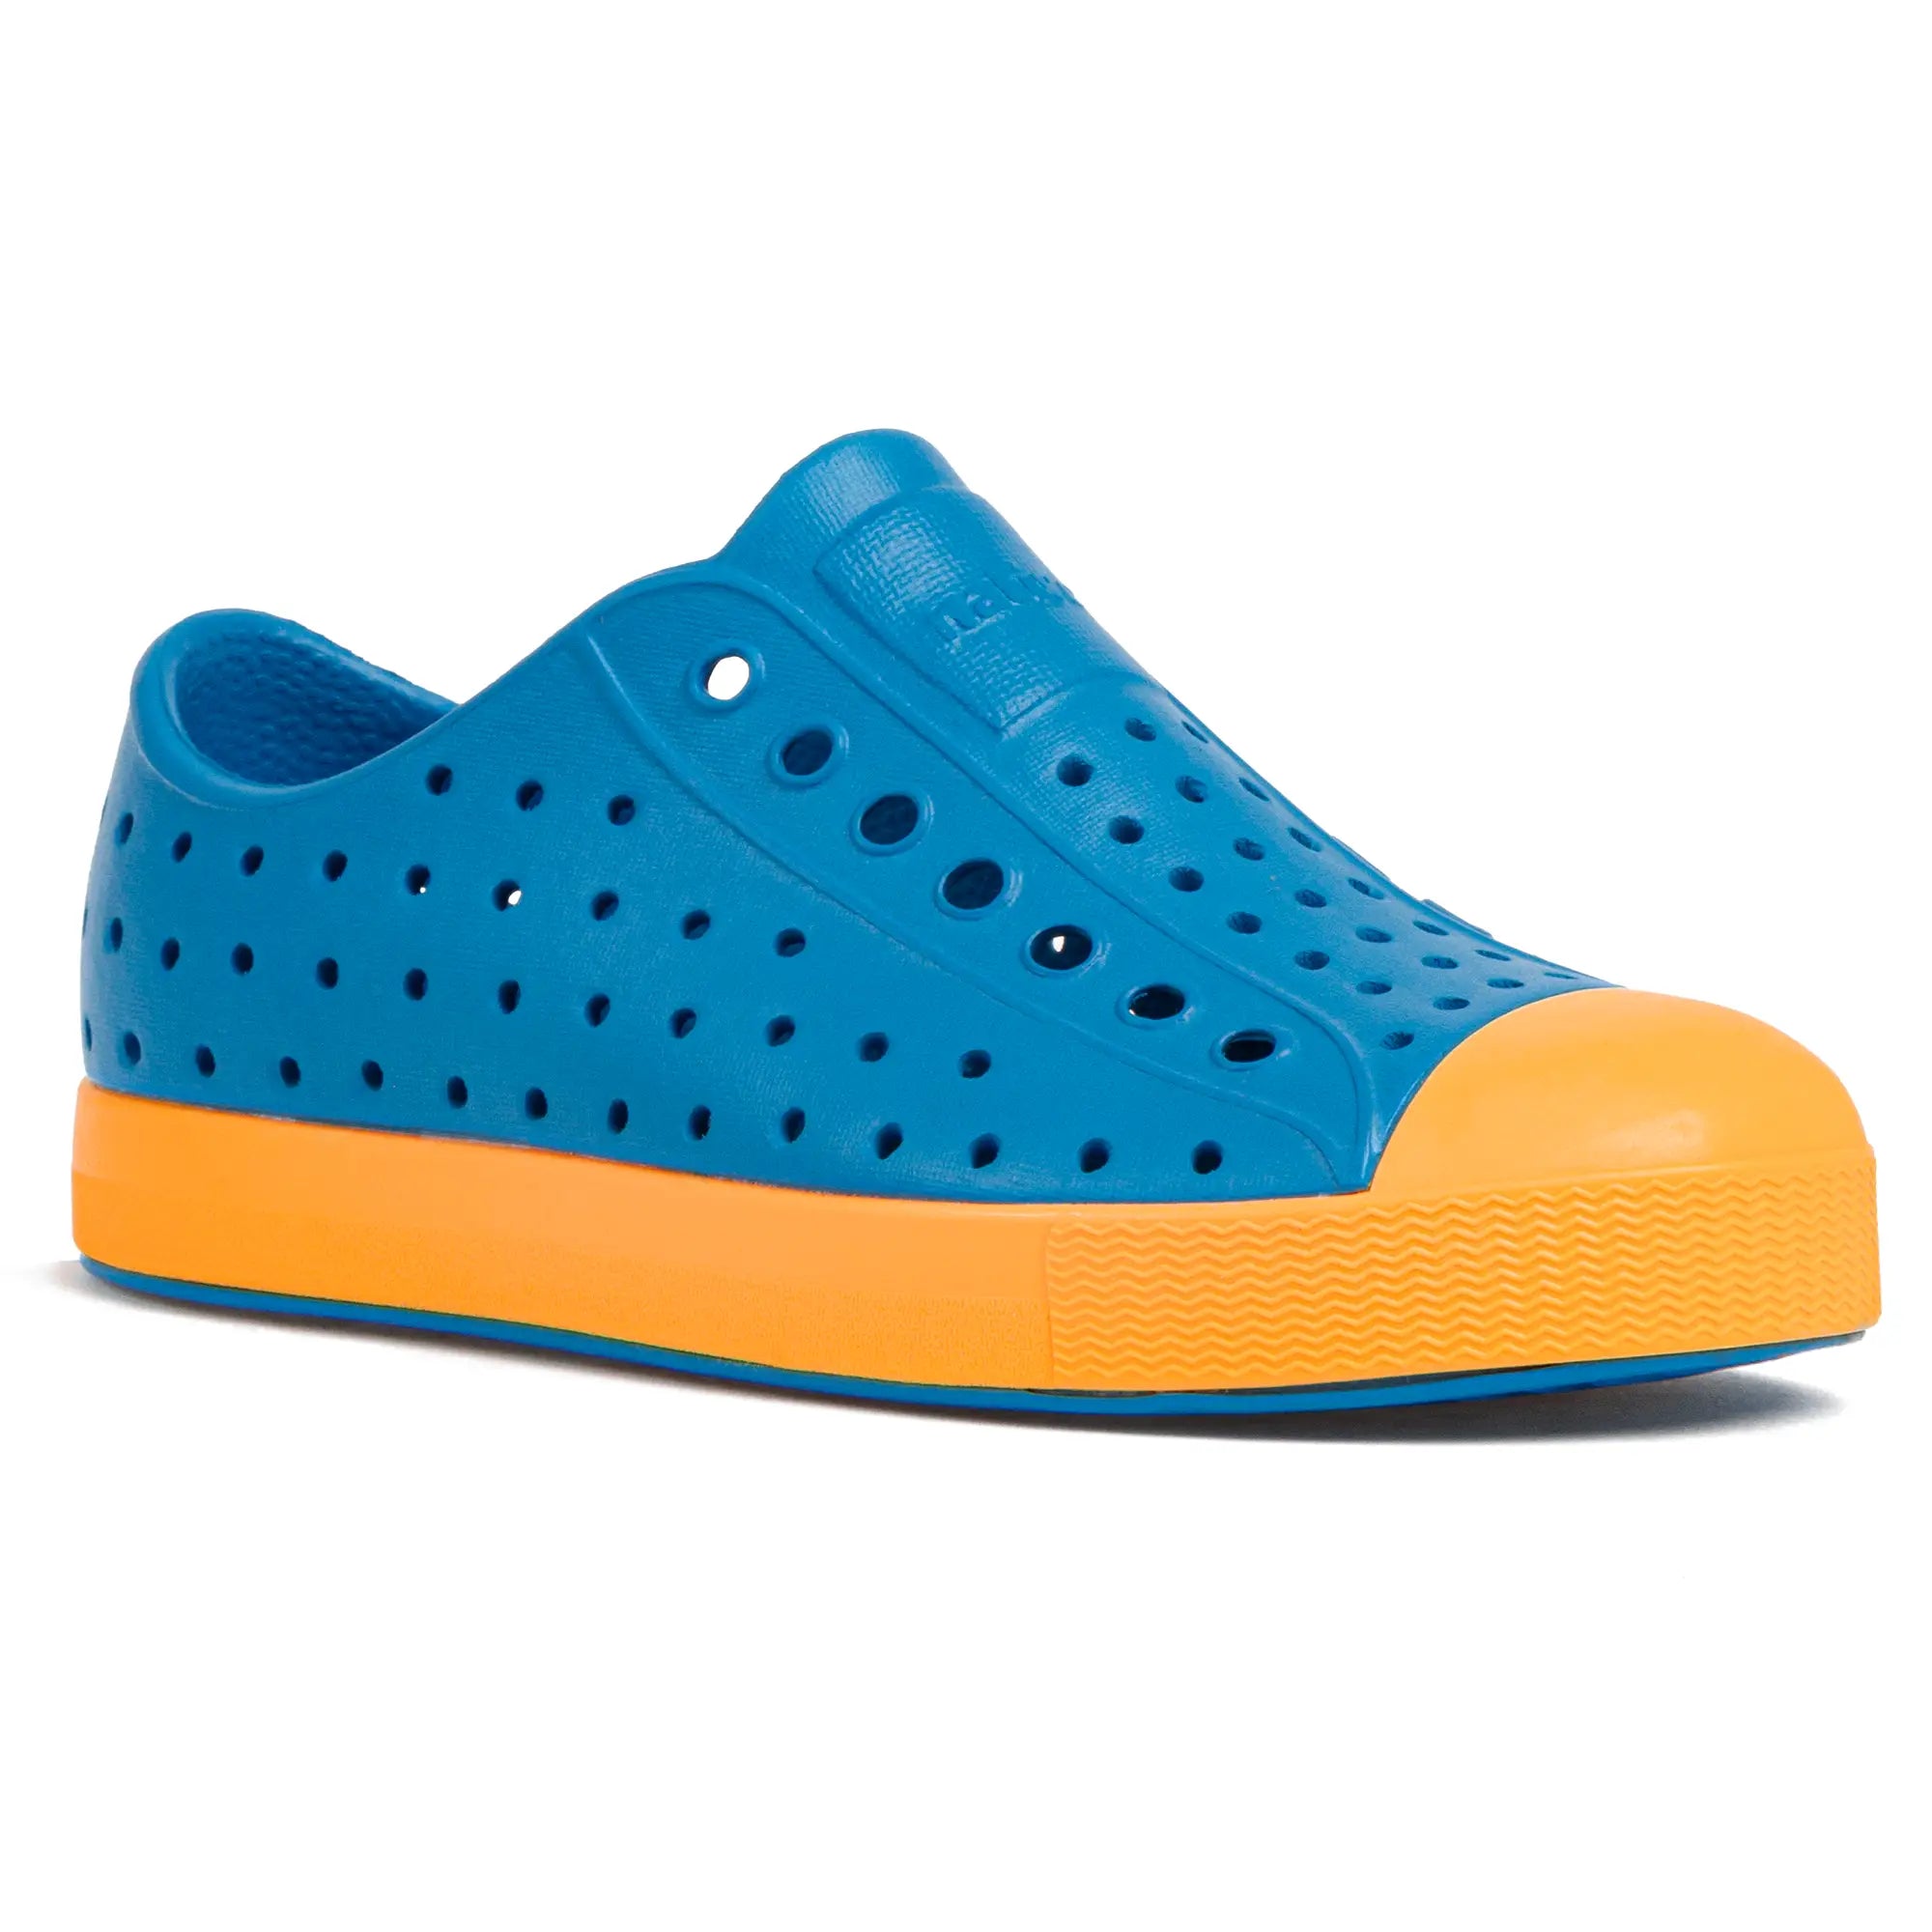 Toddler Jefferson Water shoe - Blue/Yellow